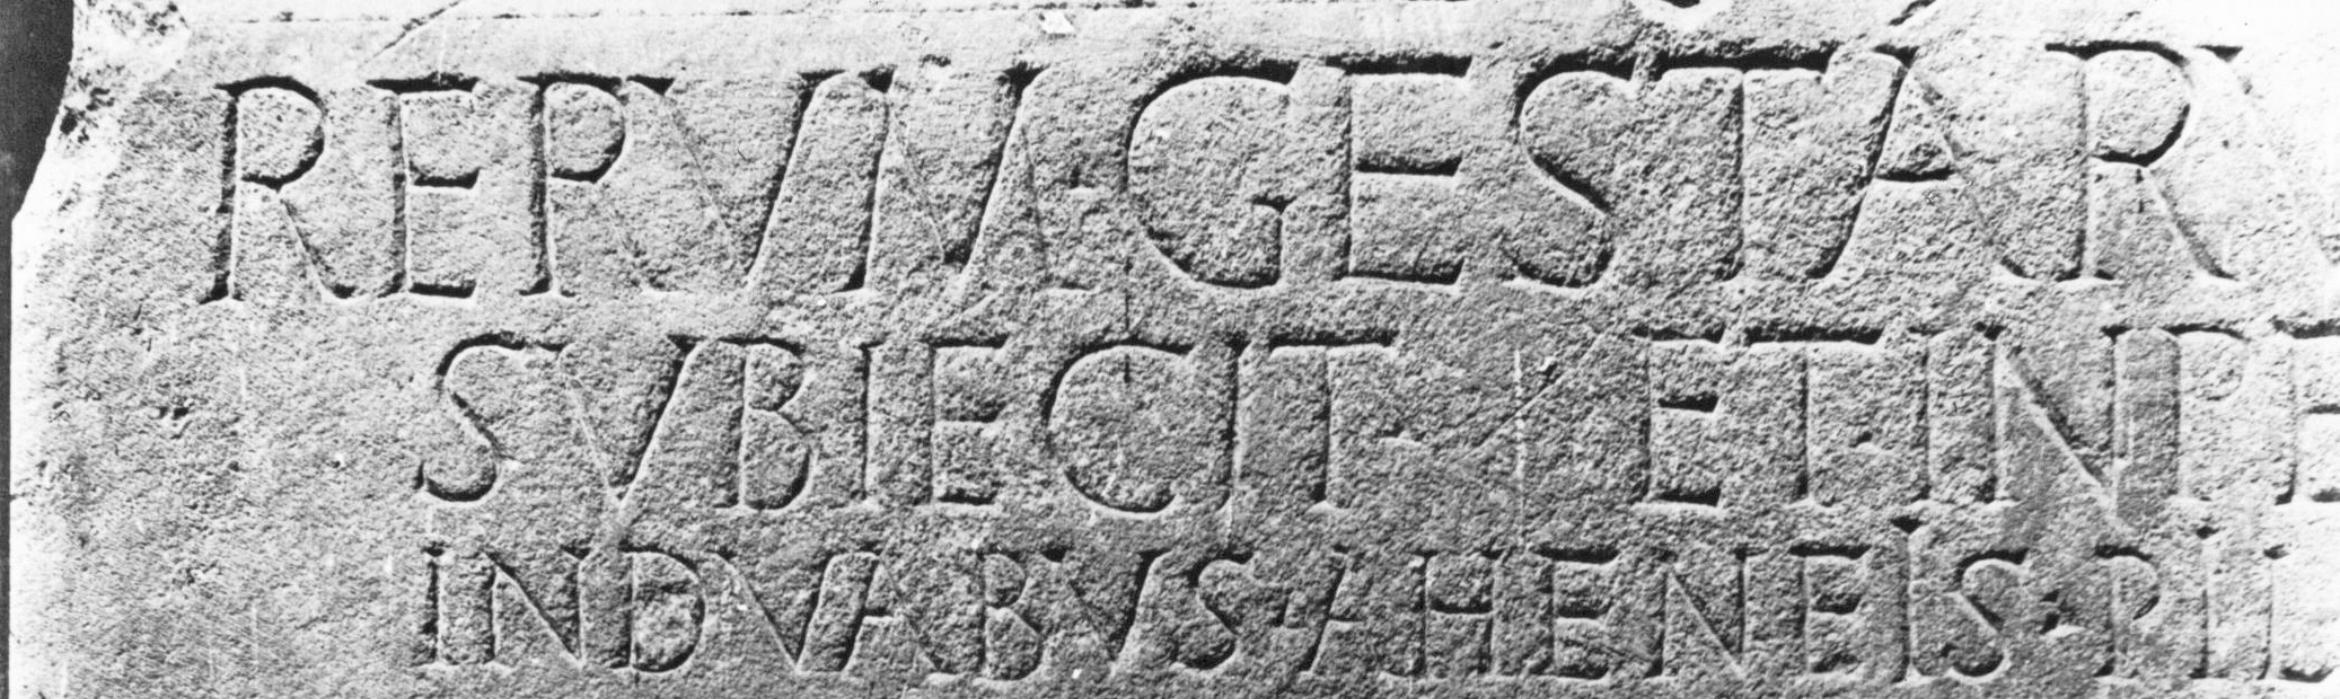 Inscripción piedra latín monumentum ancyranum